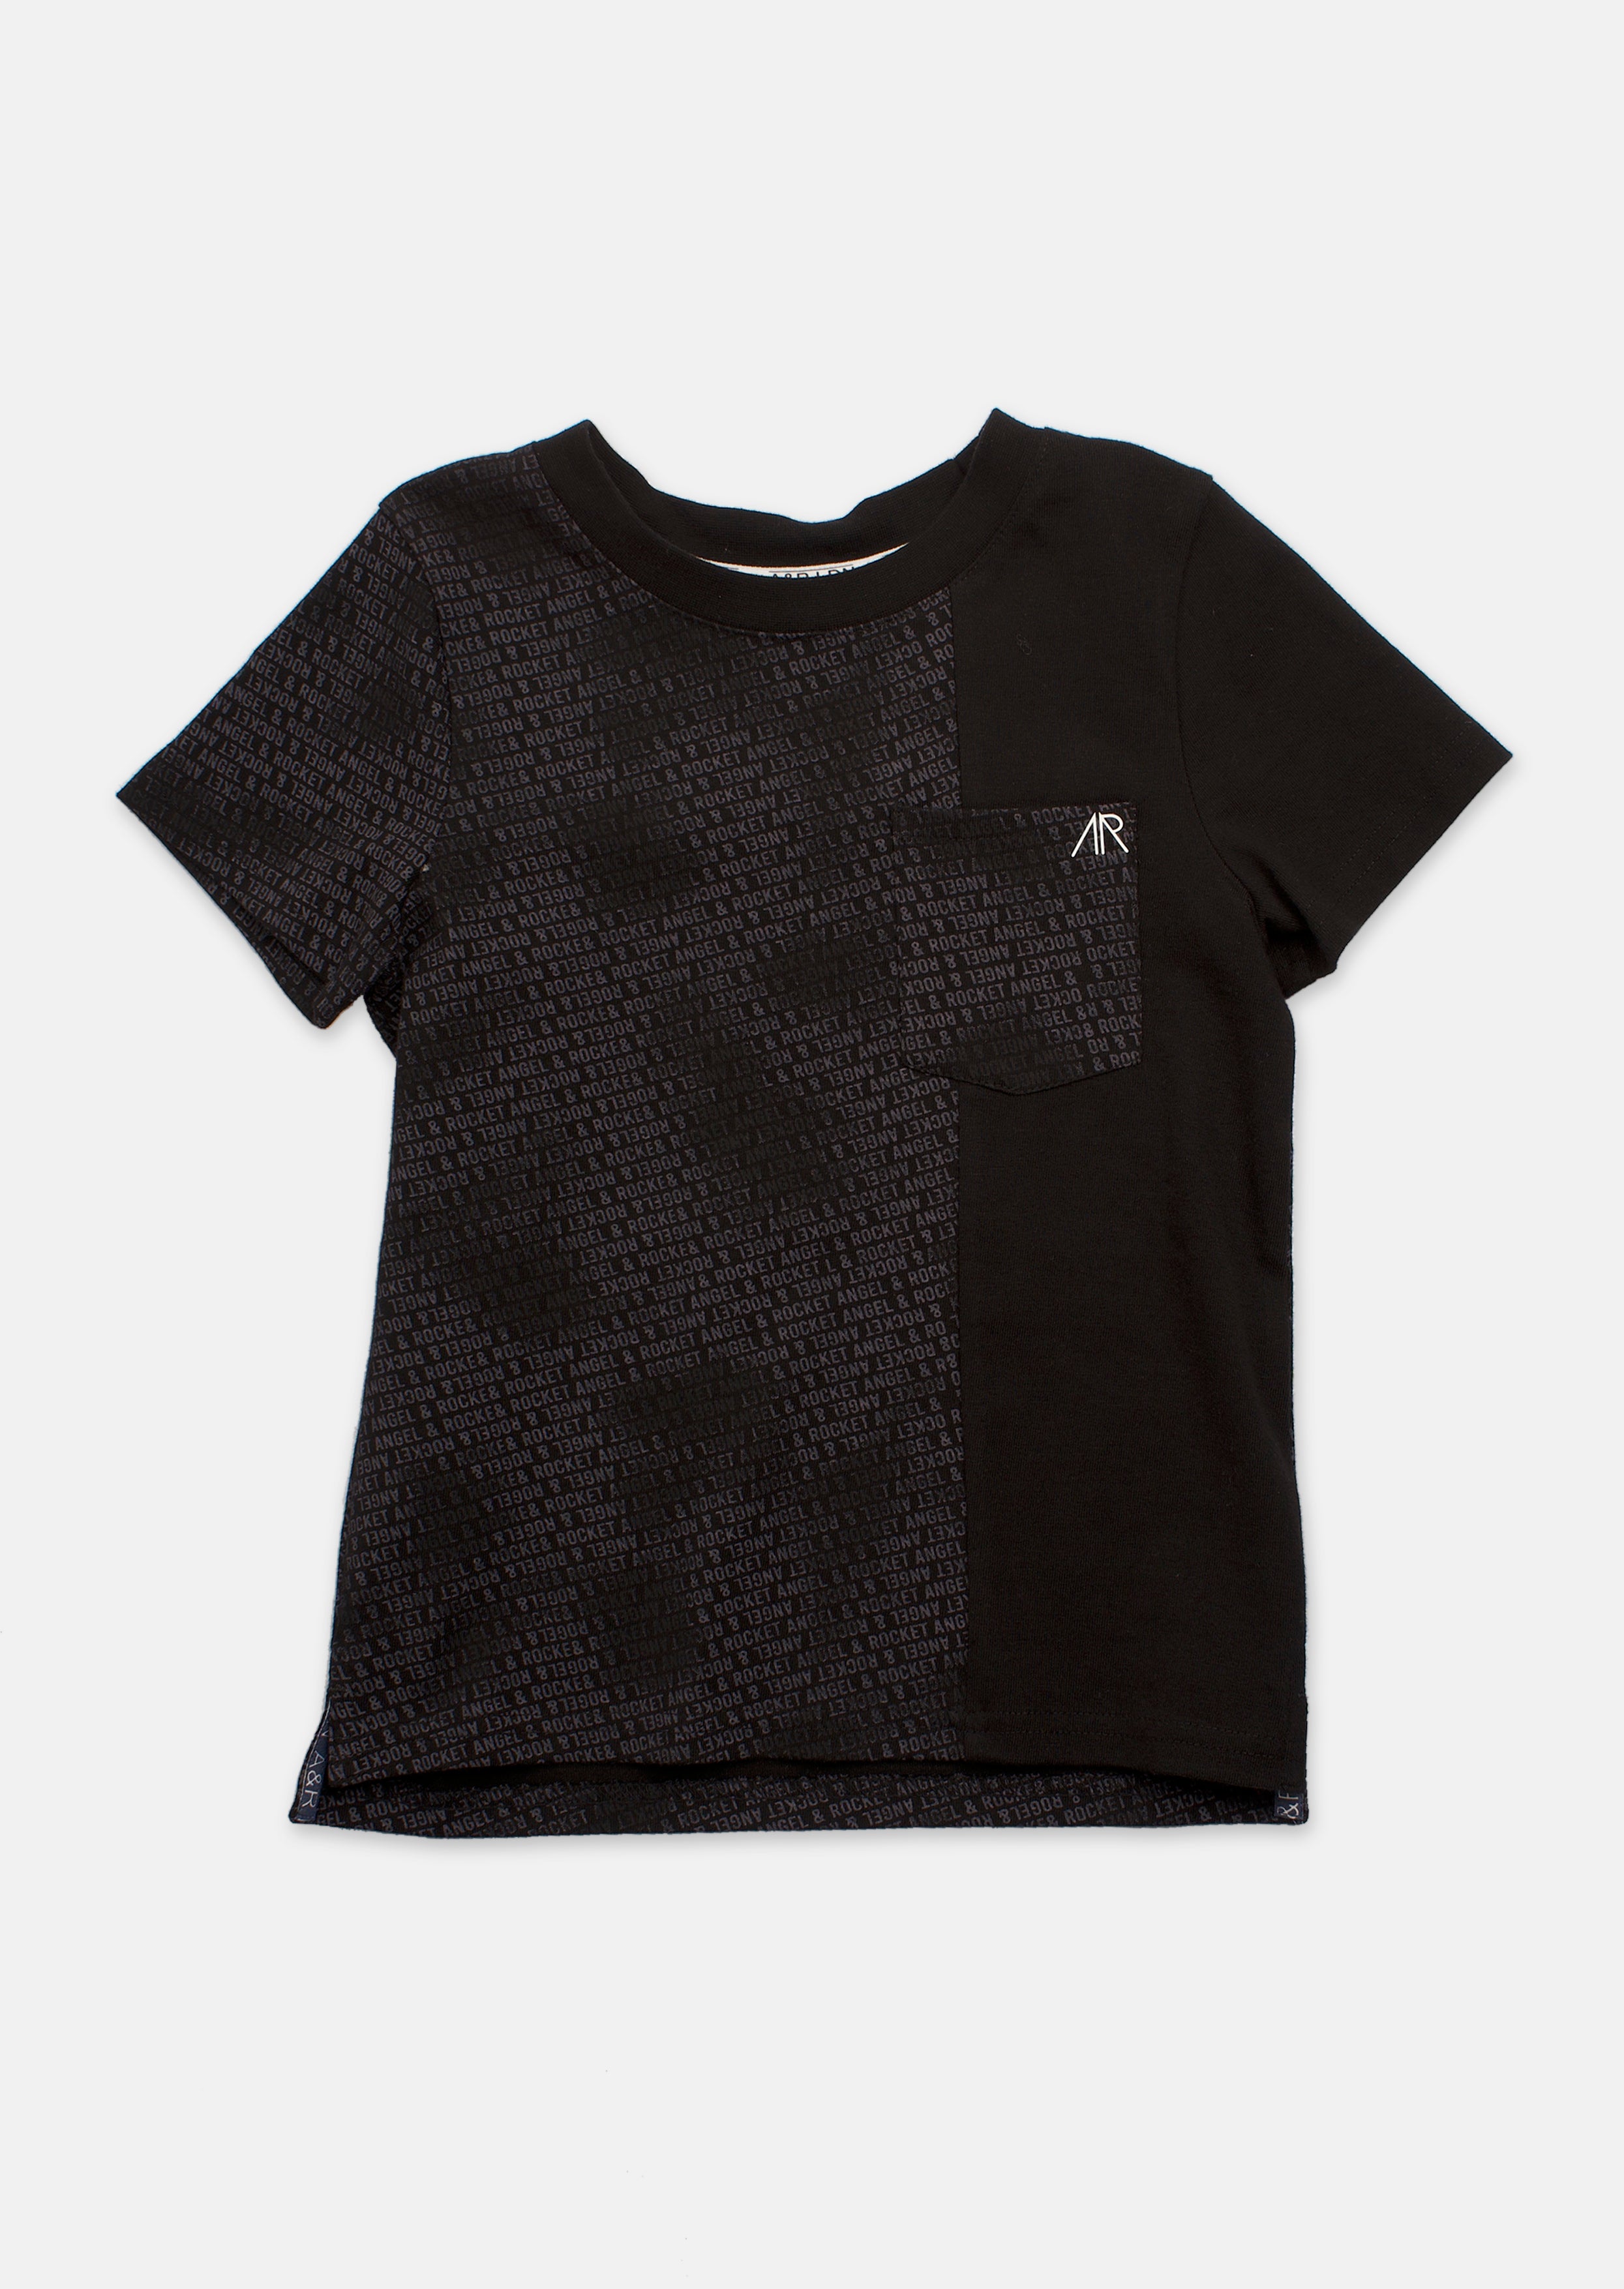 Boys Colour Block Printed Black T-Shirt with Pocket